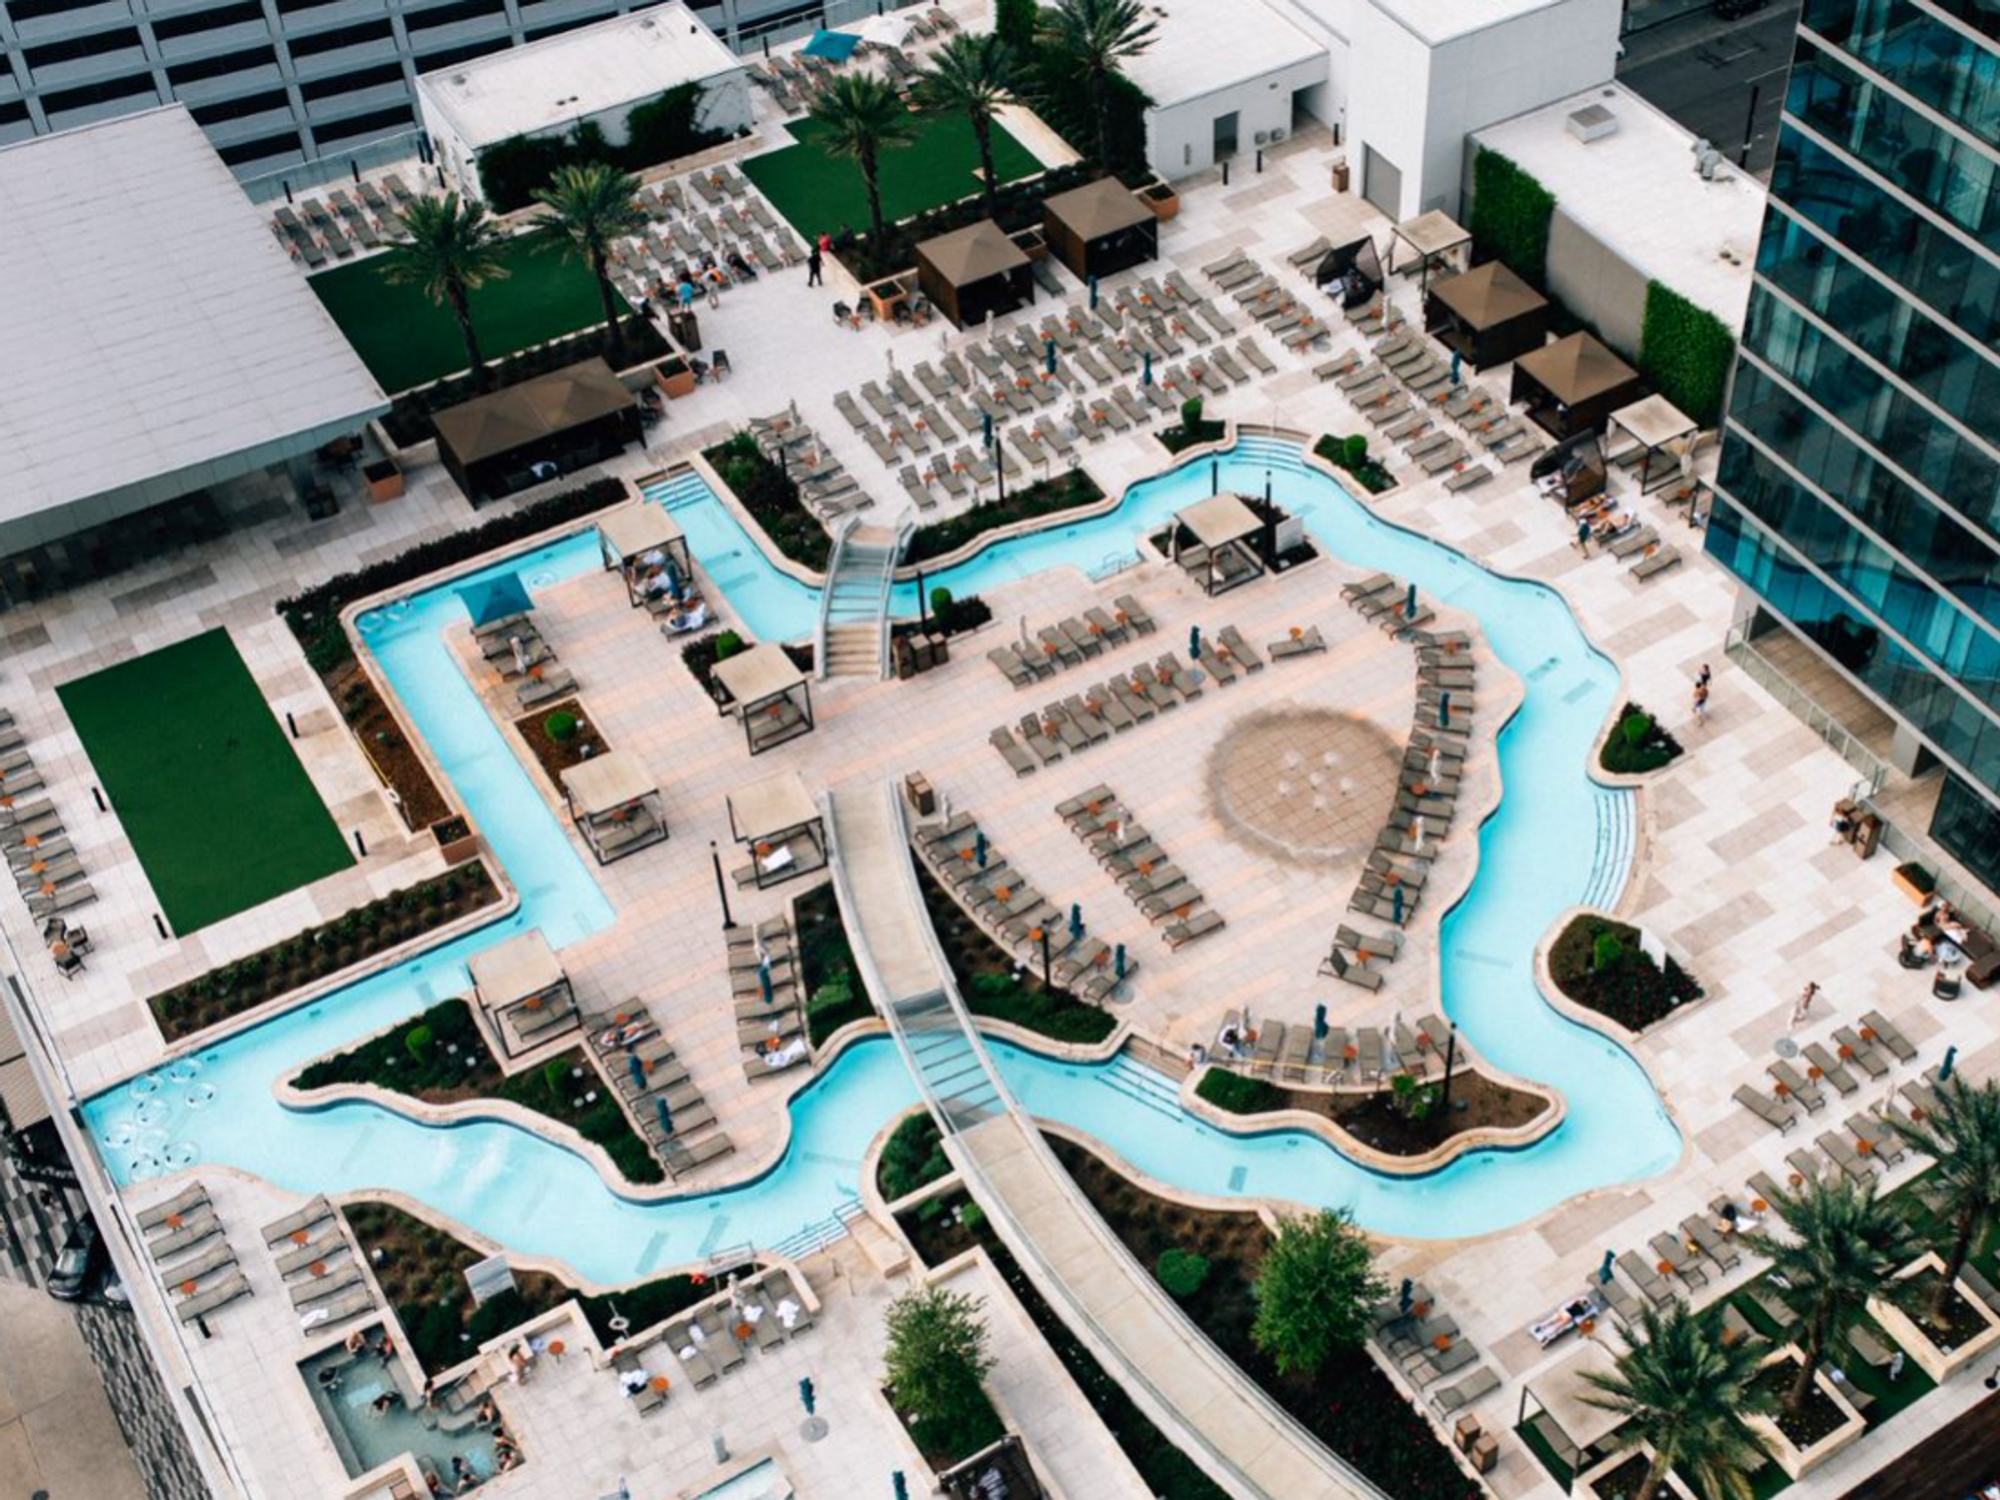 Marriott Marquis Houston's Texas-shaped lazy river pool